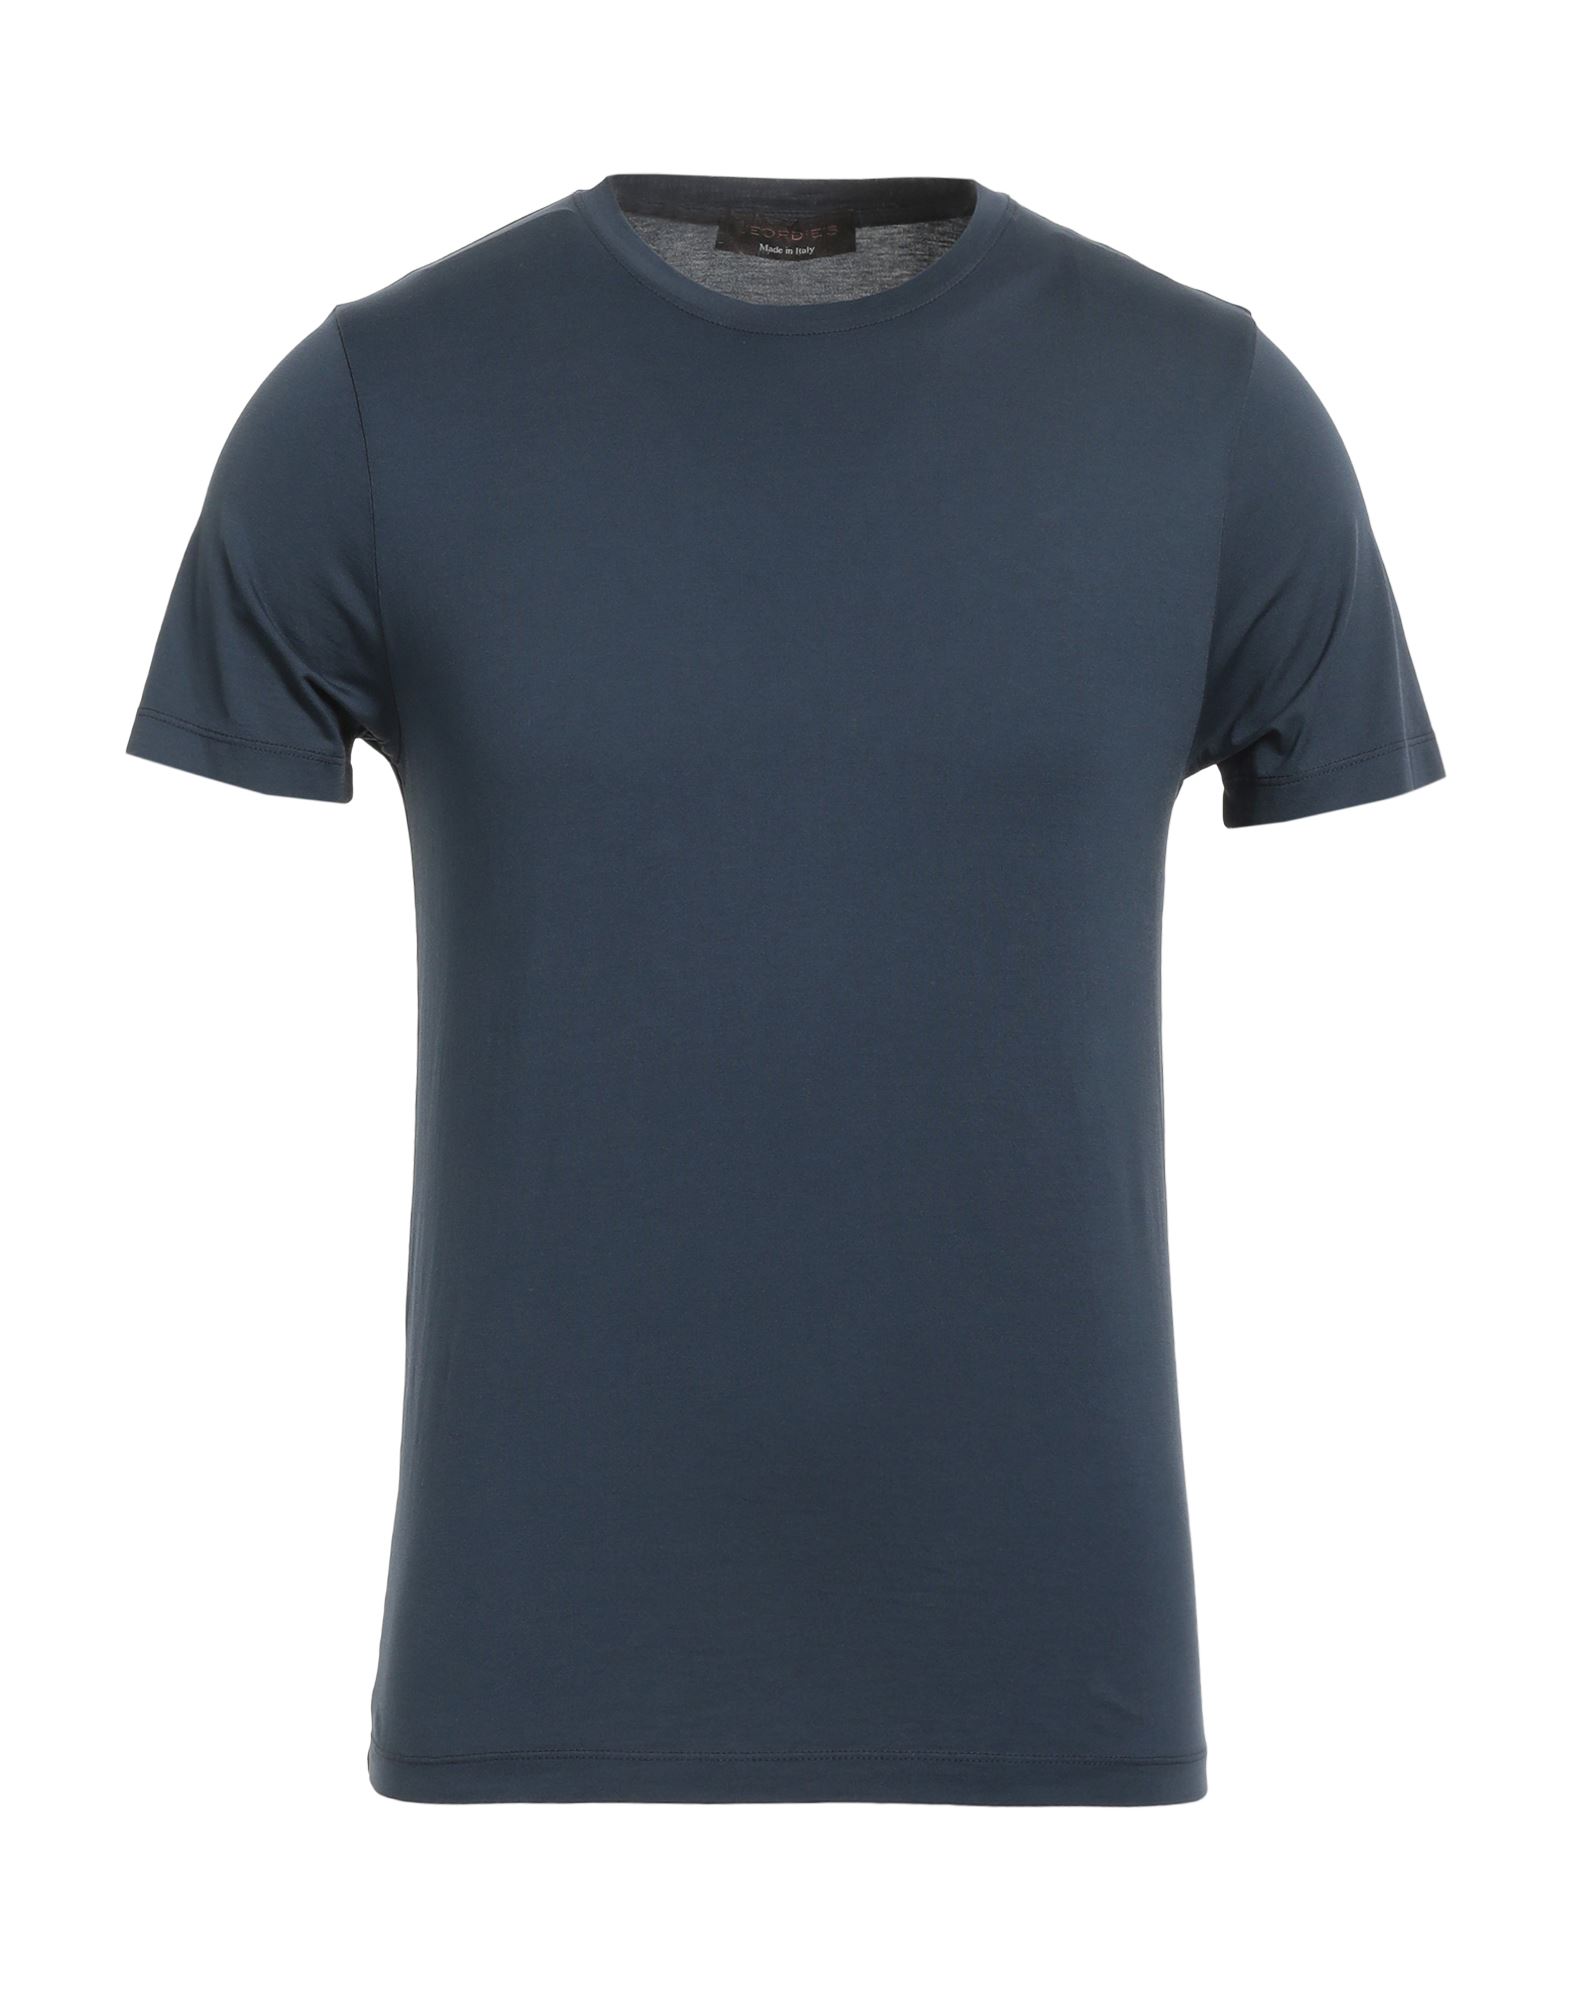 Shop Jeordie's Man T-shirt Navy Blue Size M Supima